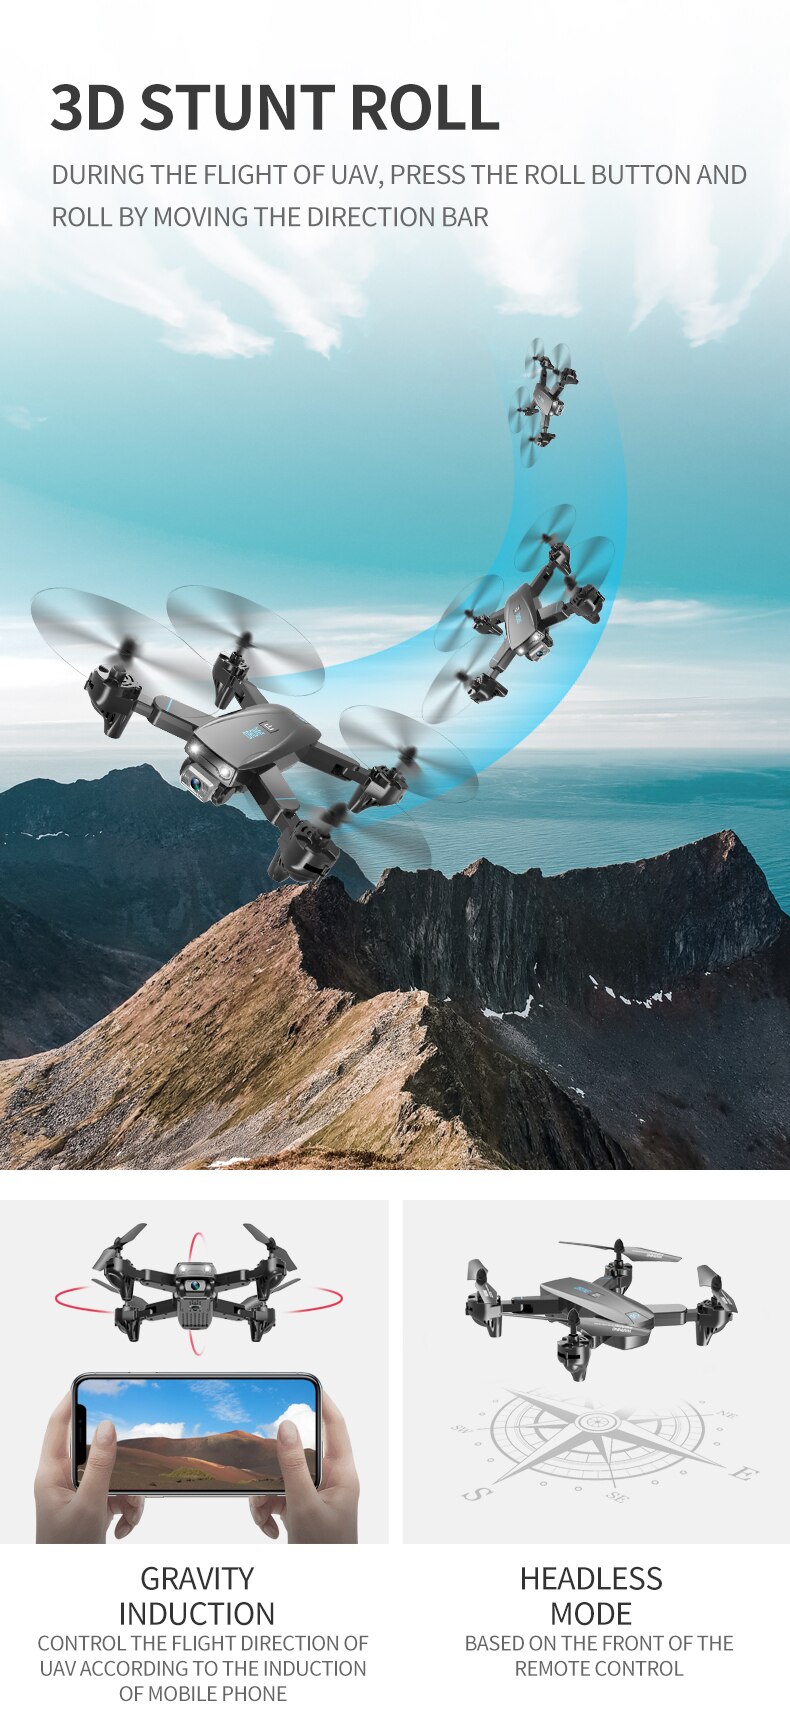 FEMA-S173-Mini-Drone-With-Camera-4K-HD-Professional-Wide-Angle-Selfie-WIFI-FPV-VS-RC-Quadcopter-S167-1005001567562952